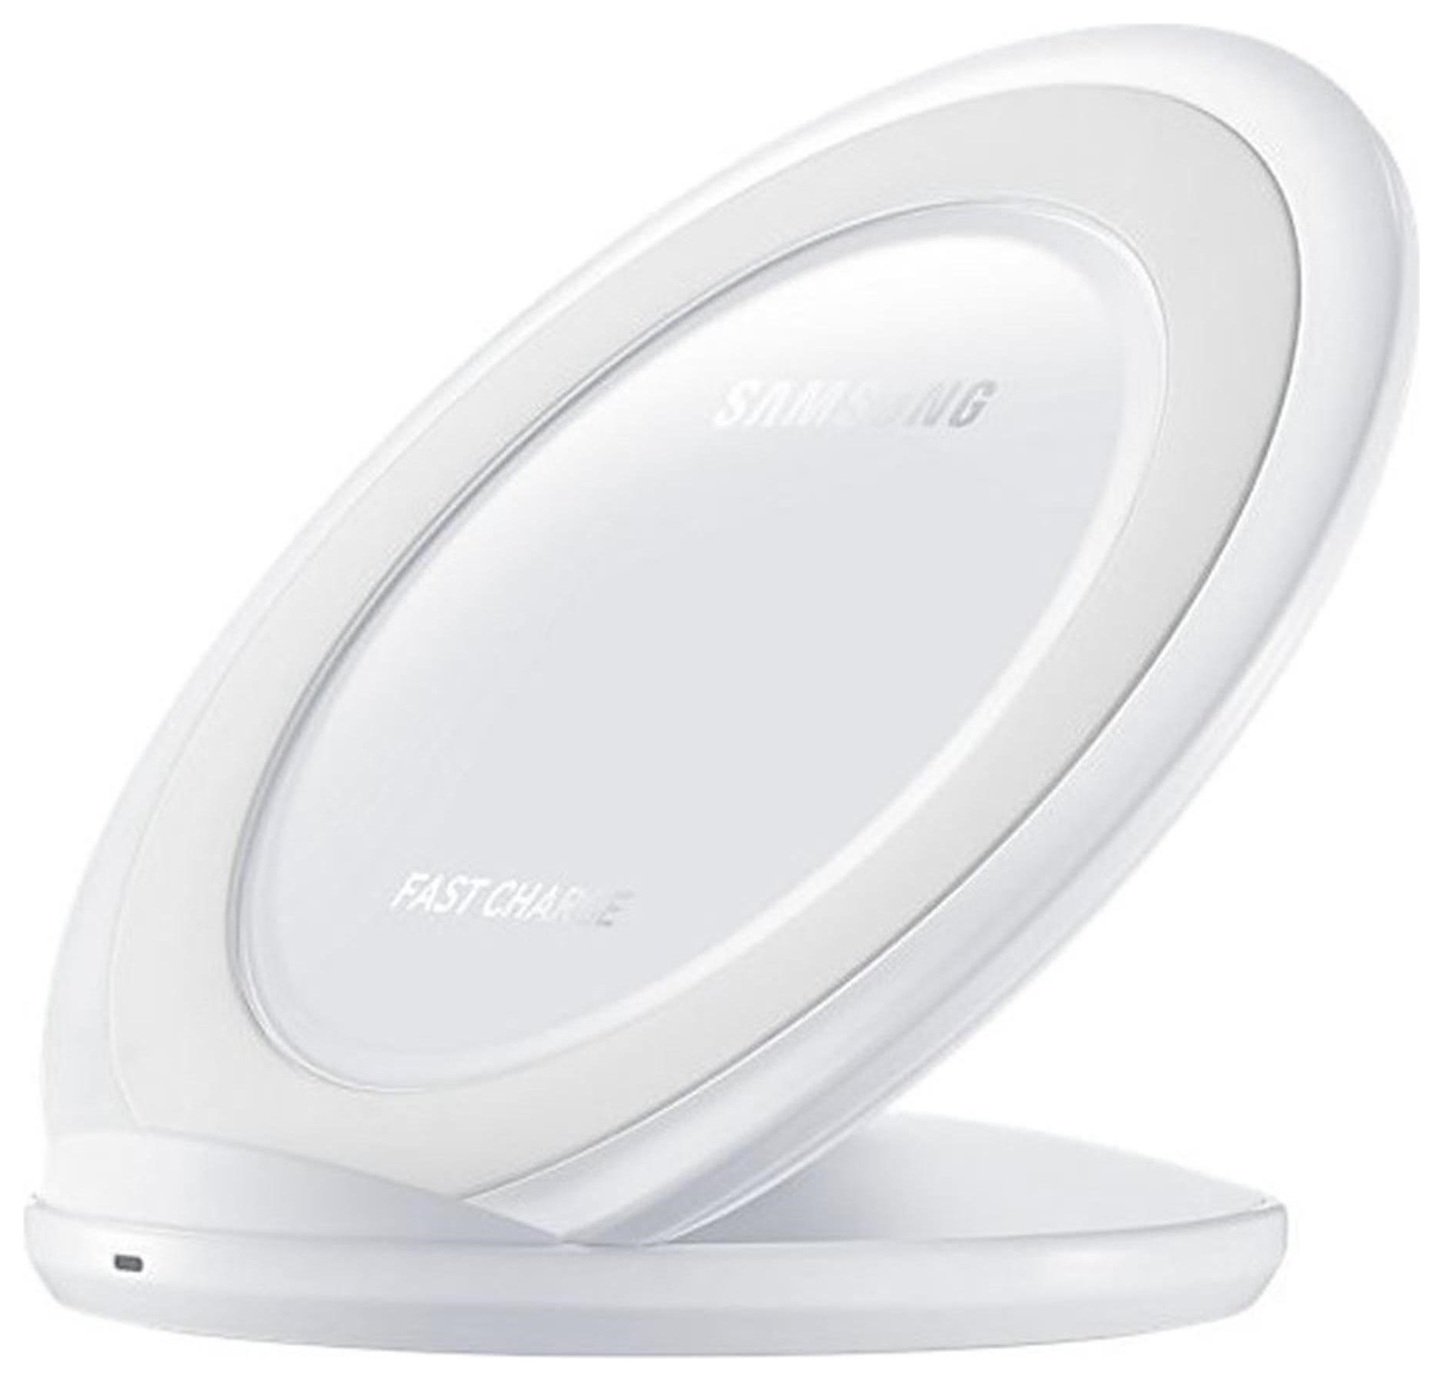 Samsung Wireless Charging Stand - White